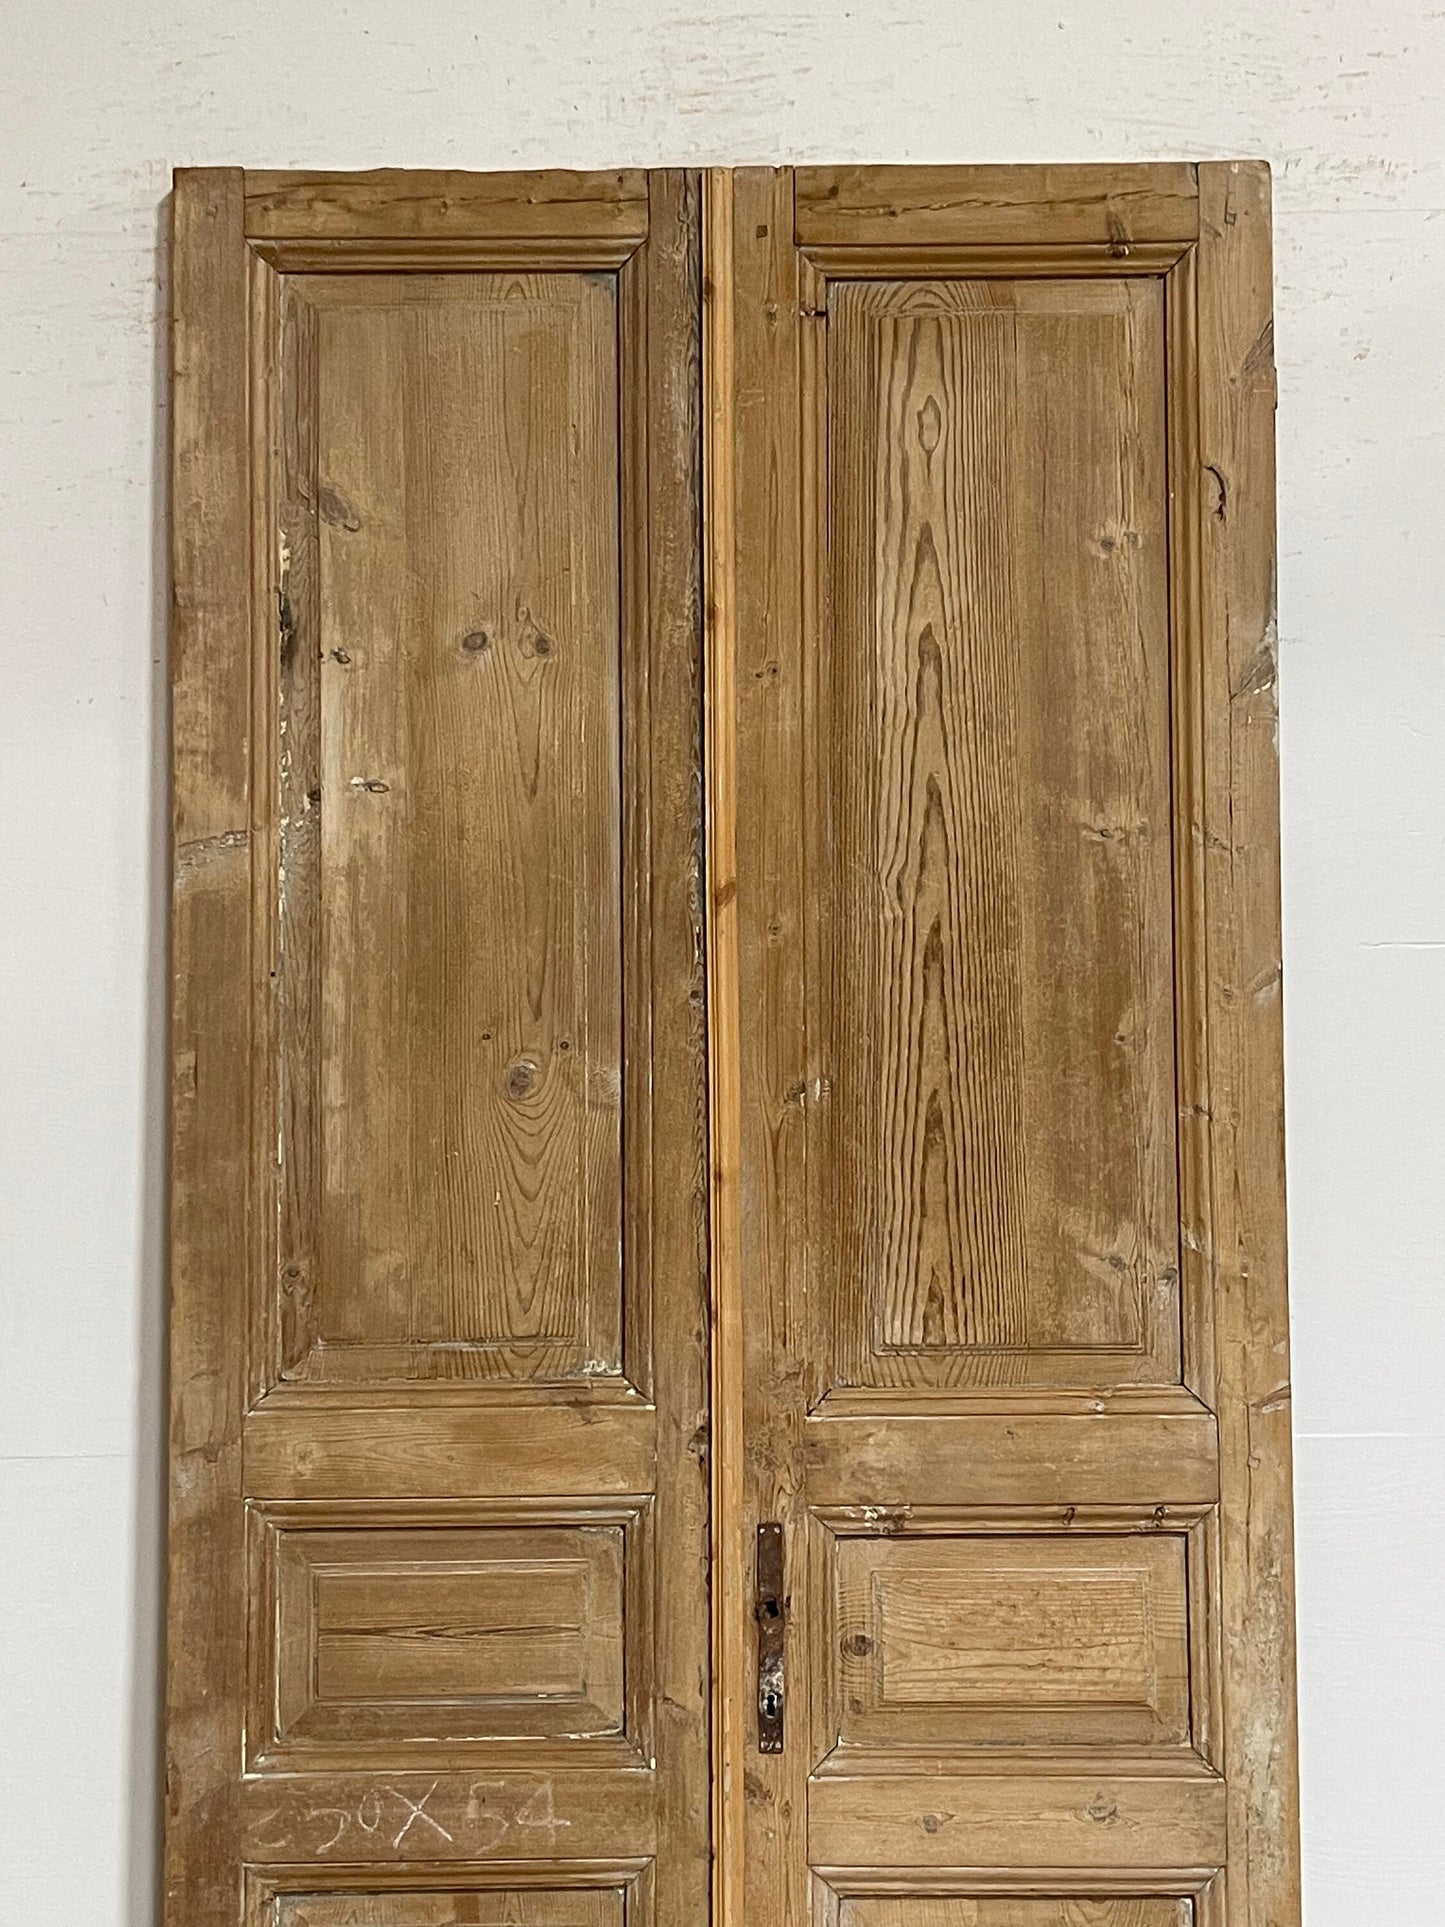 Antique French panel doors (97.5x42.5) G0200s